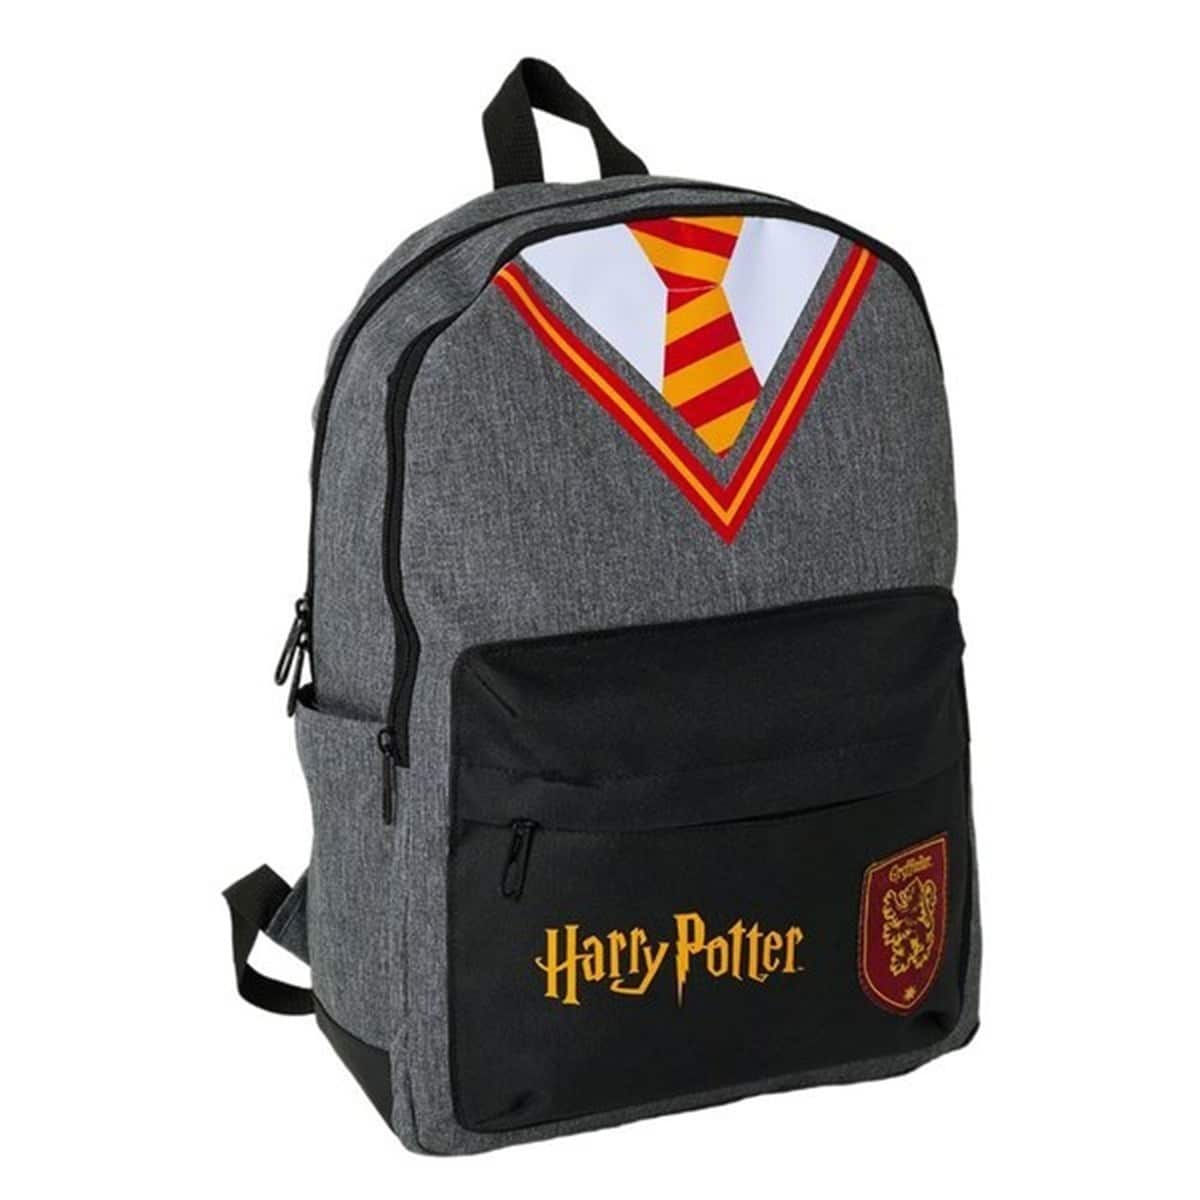 Harry Potter Okul Çantası 2106